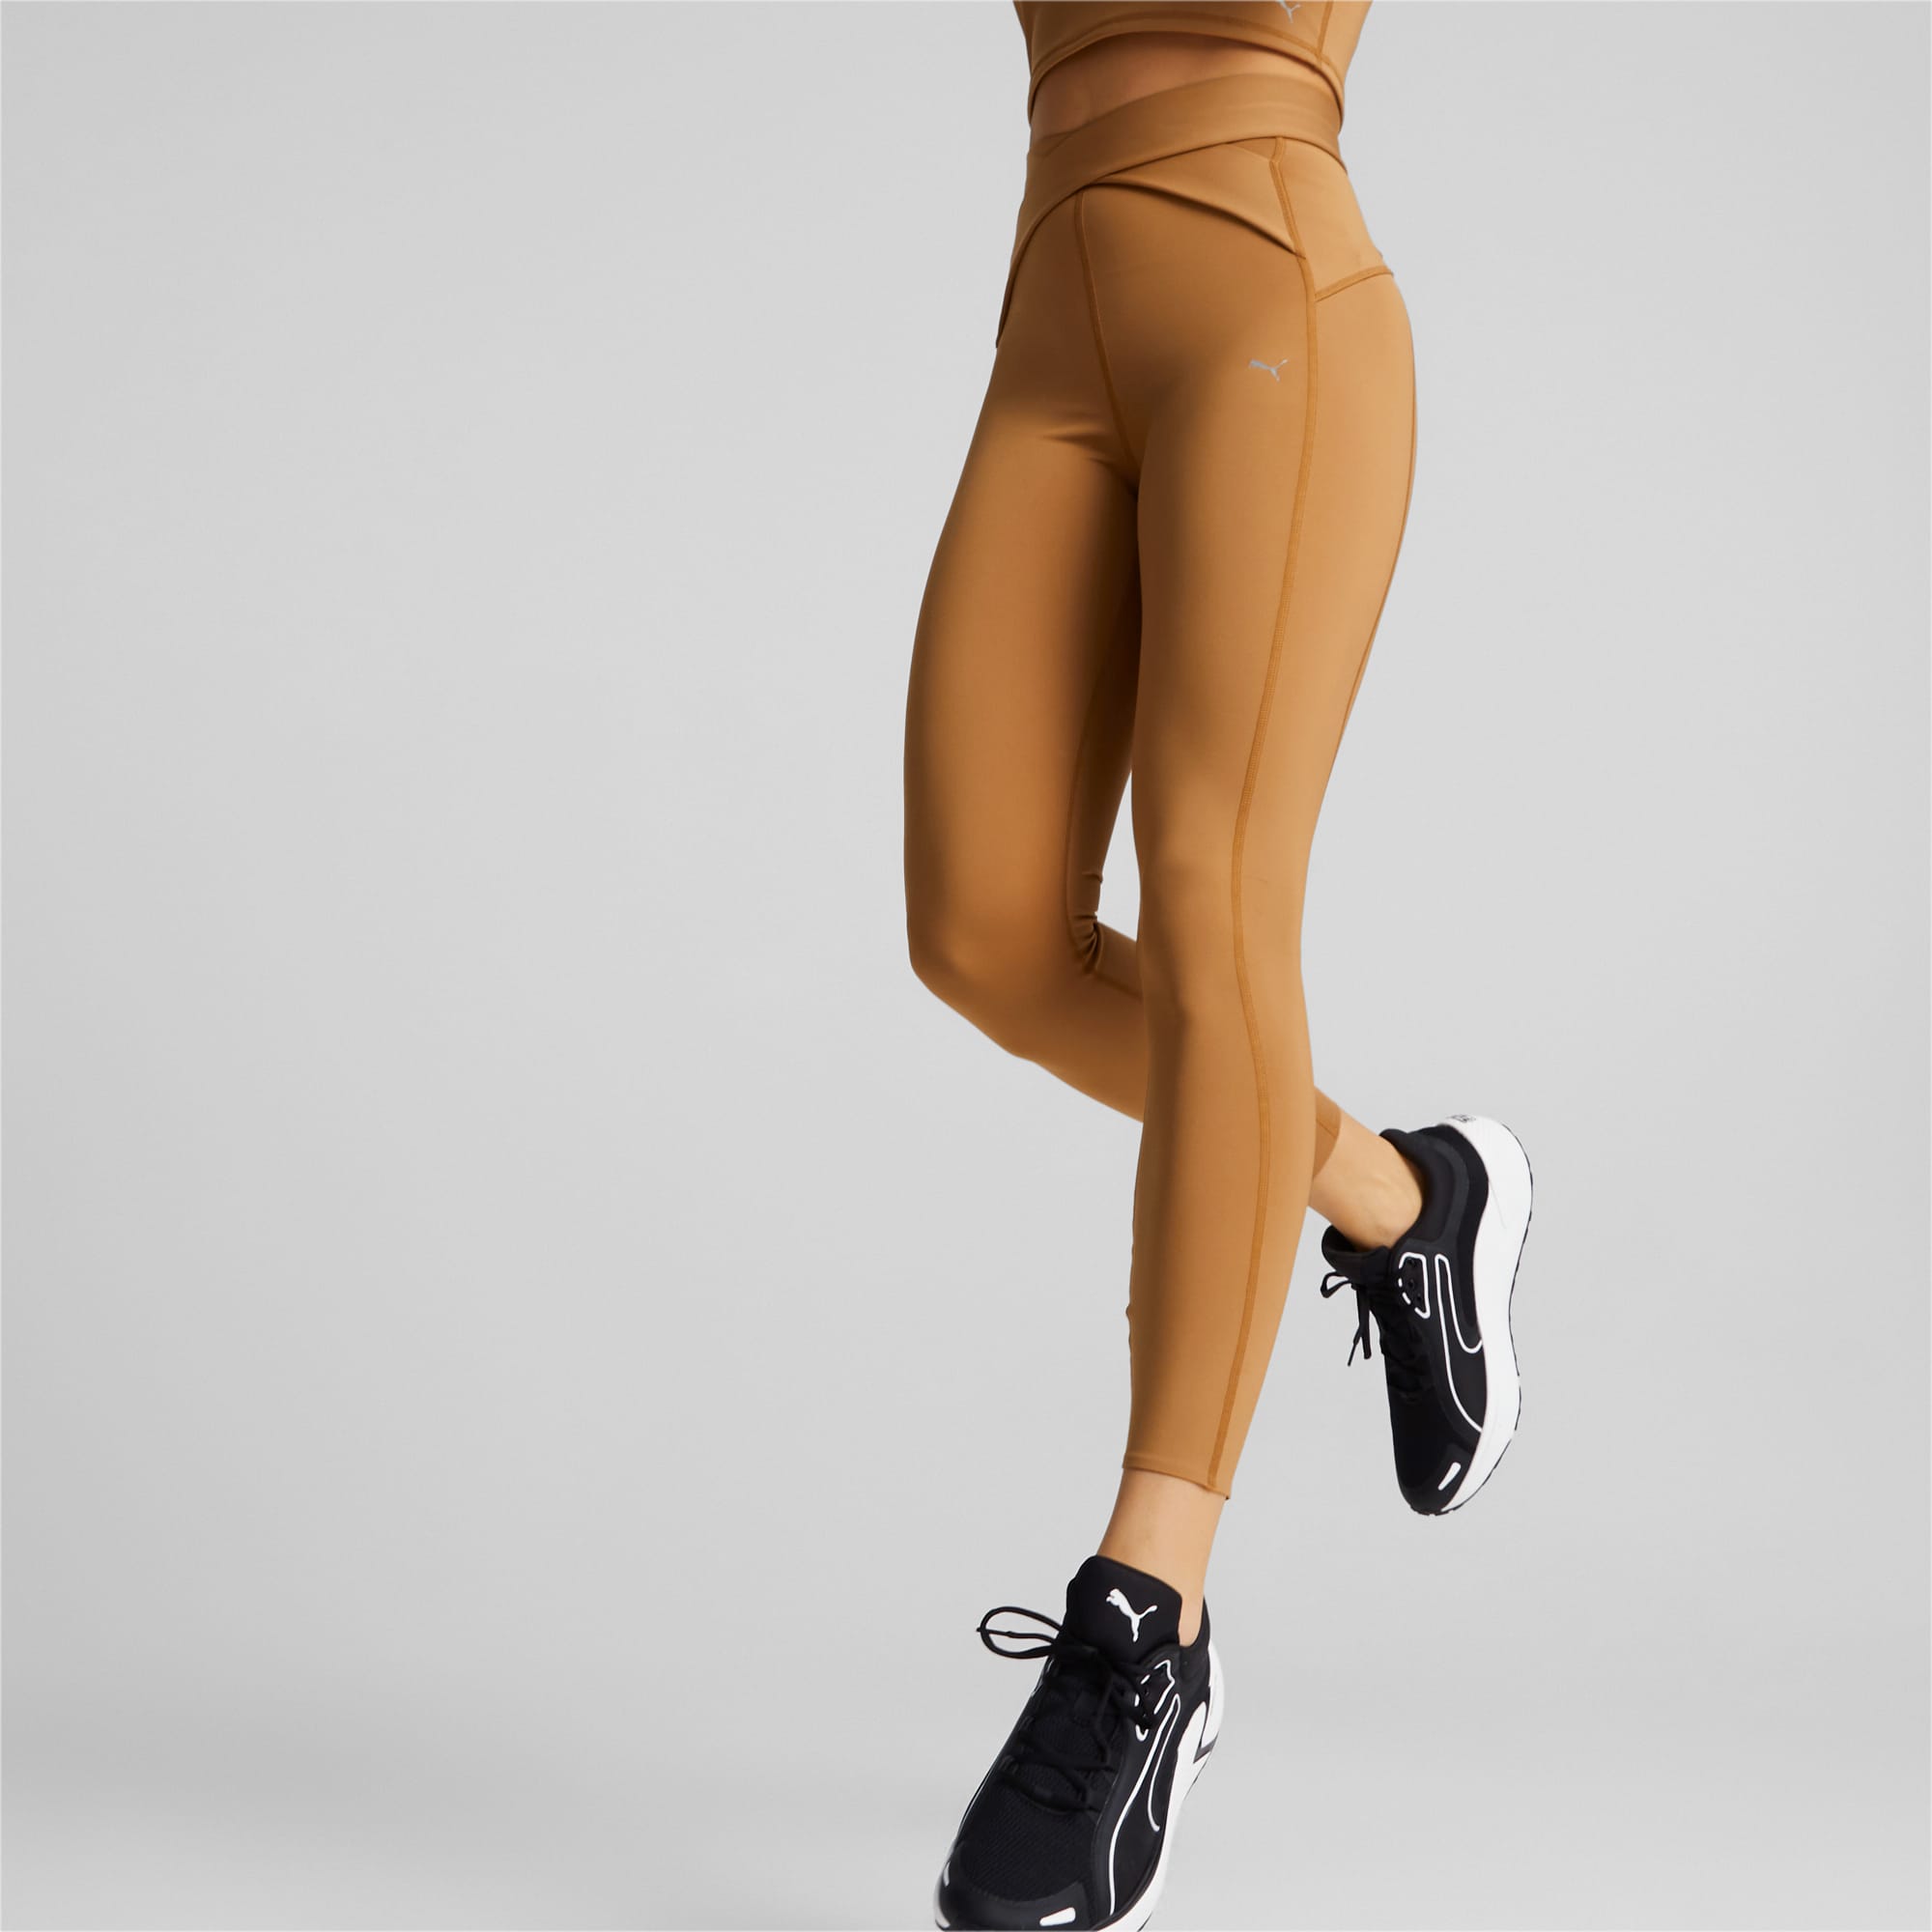 lululemon - Fast and Free Leggings on Designer Wardrobe